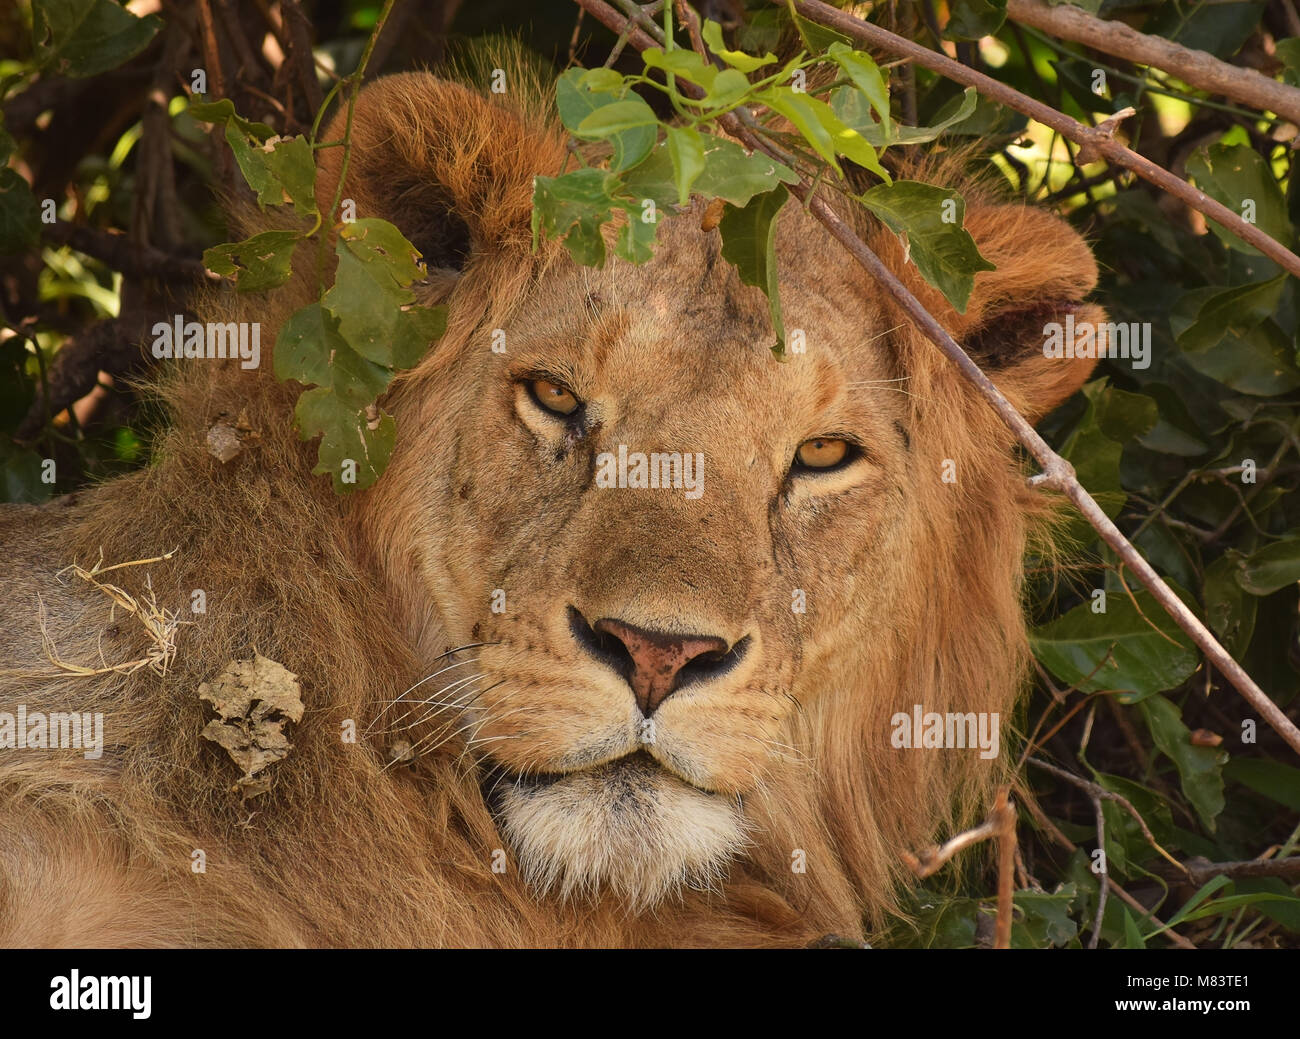 Lion close up portrait looking into camera, Maasai Mara, Kenya Stock Photo